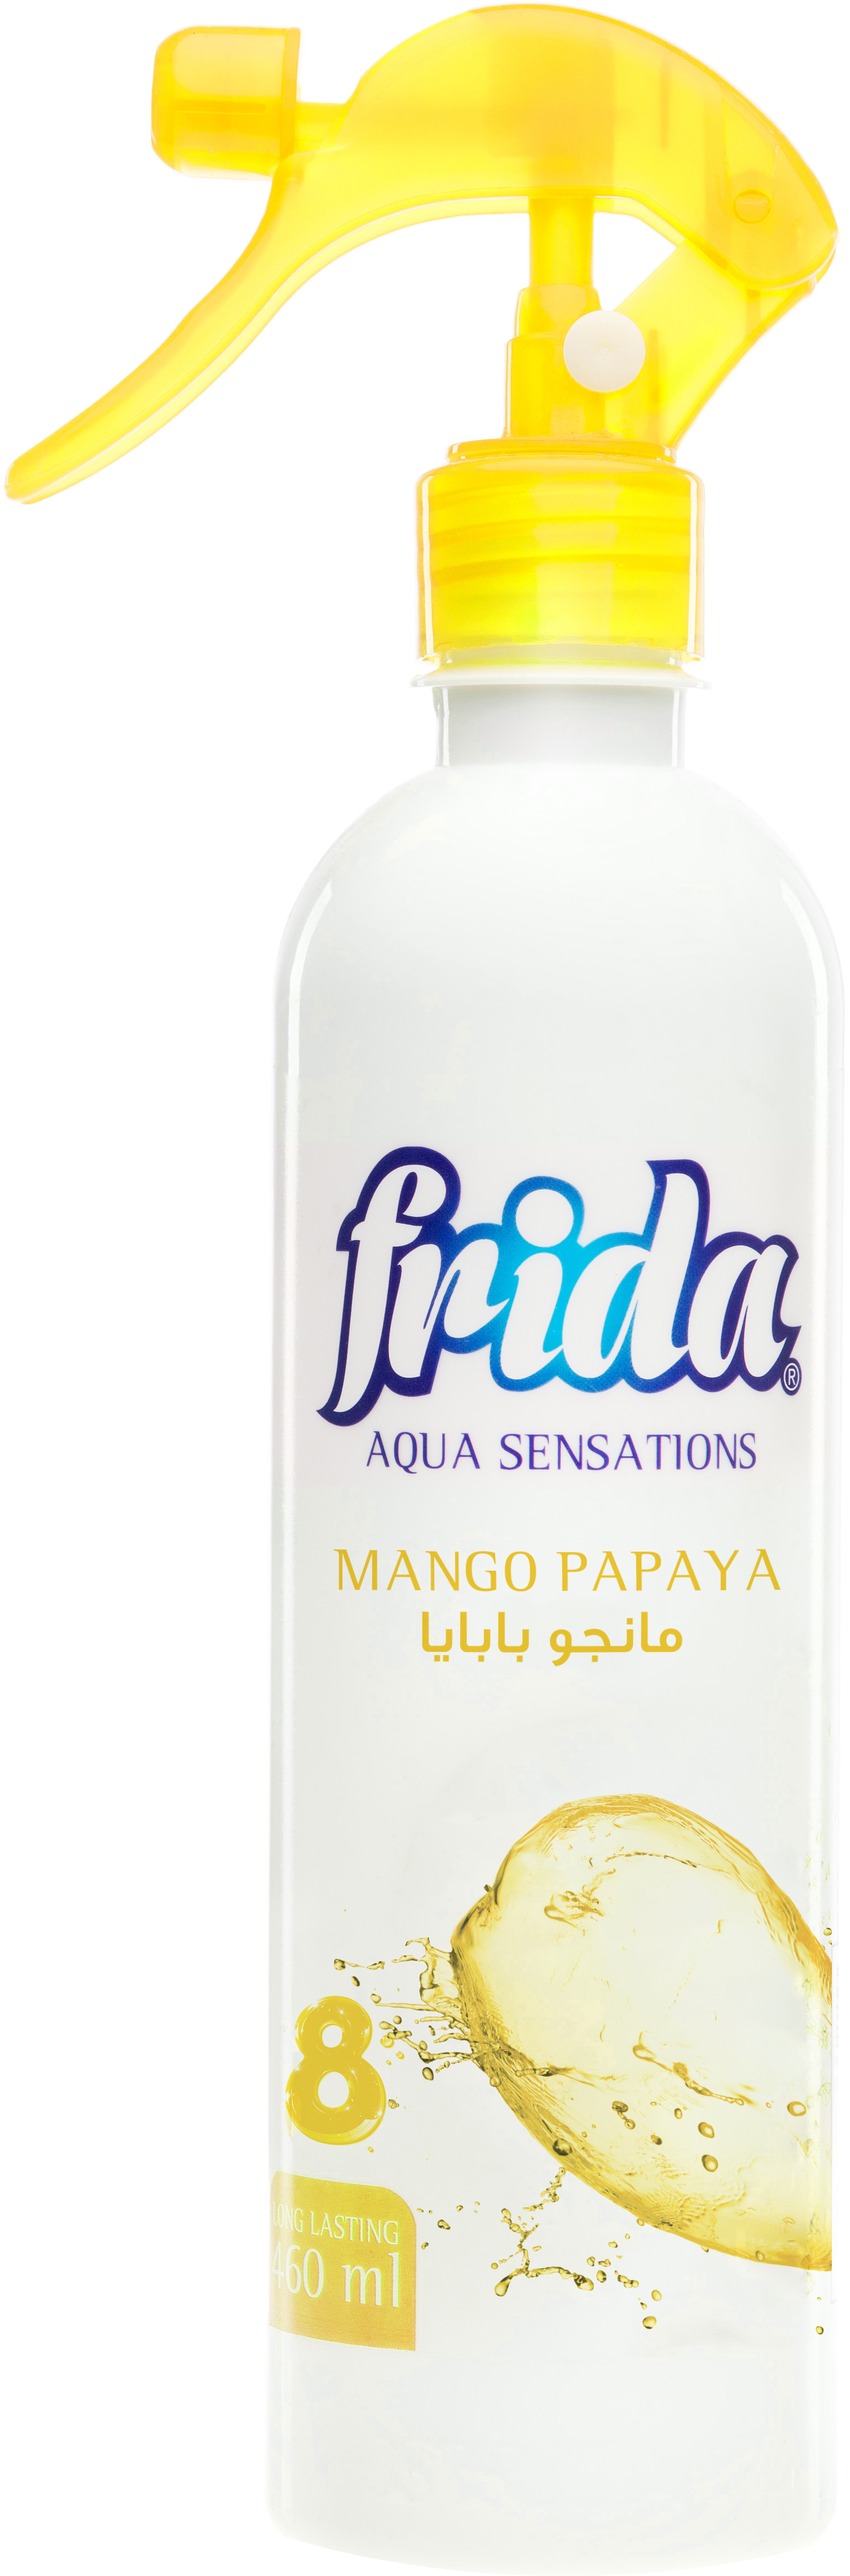 Frida Aqua Sensations "Mango Papaya"